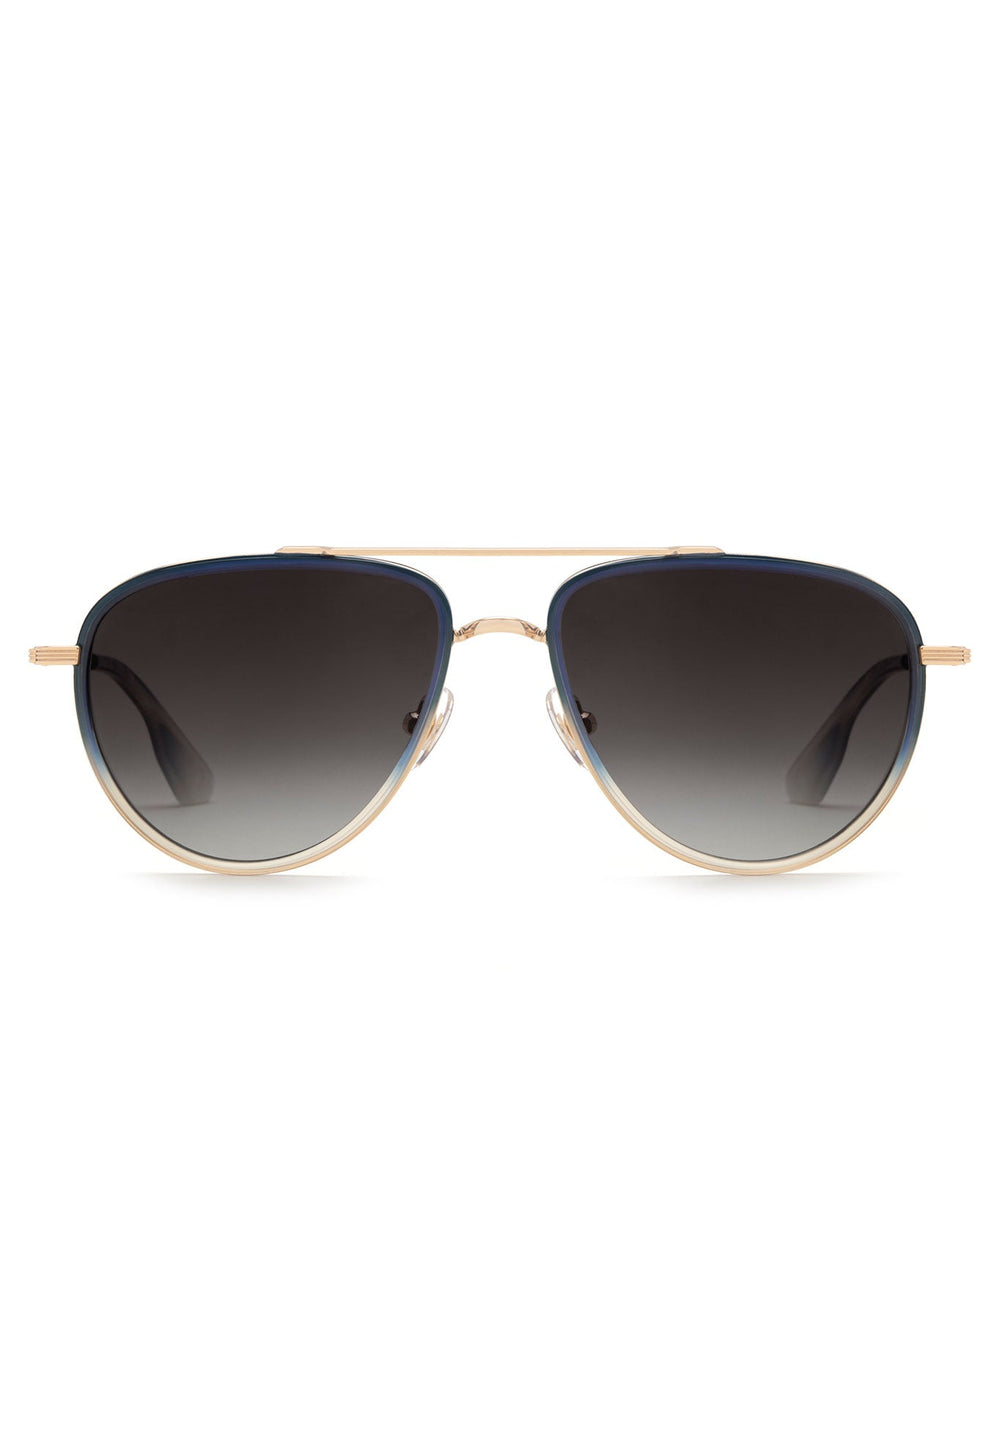 COLEMAN | 18K + Matte Indigo Fade + Gravity Handcrafted, navy acetate luxury KREWE sunglasses